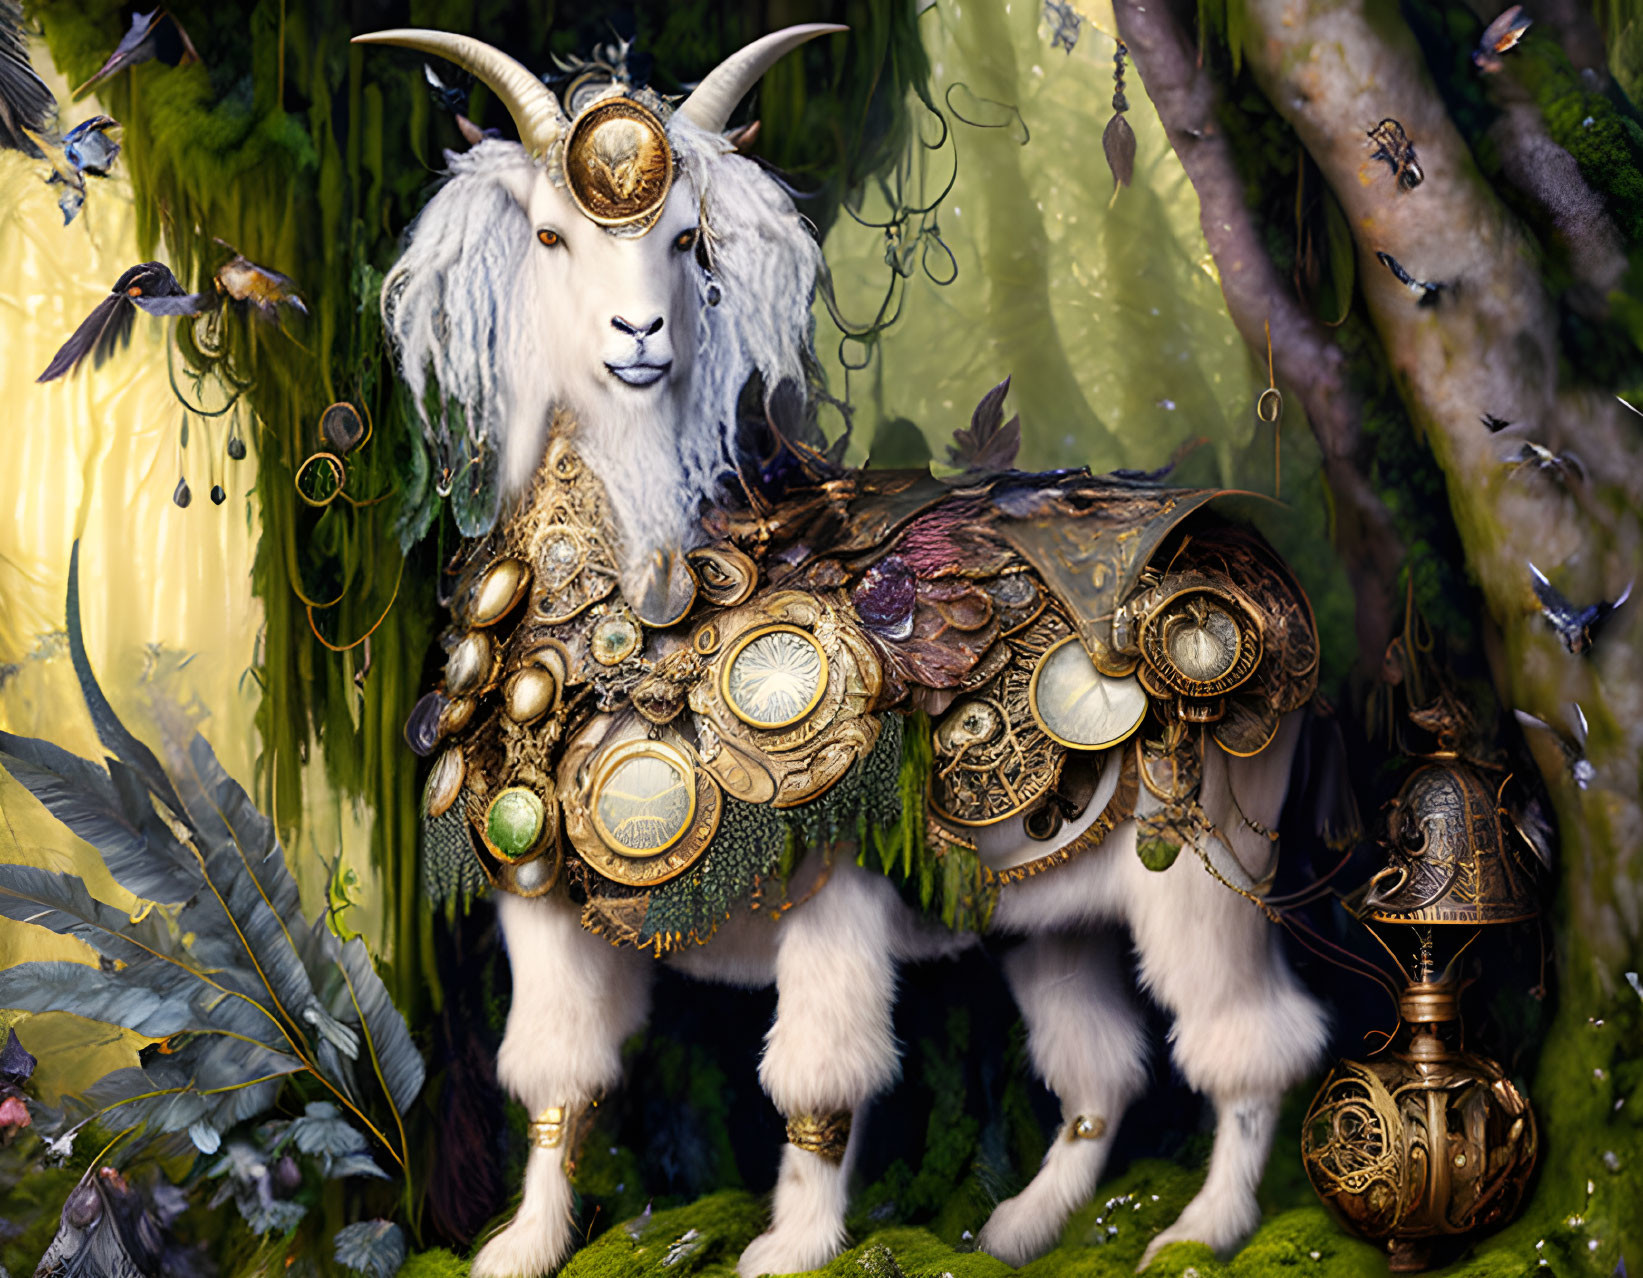 The Steampunk Druid's Goat